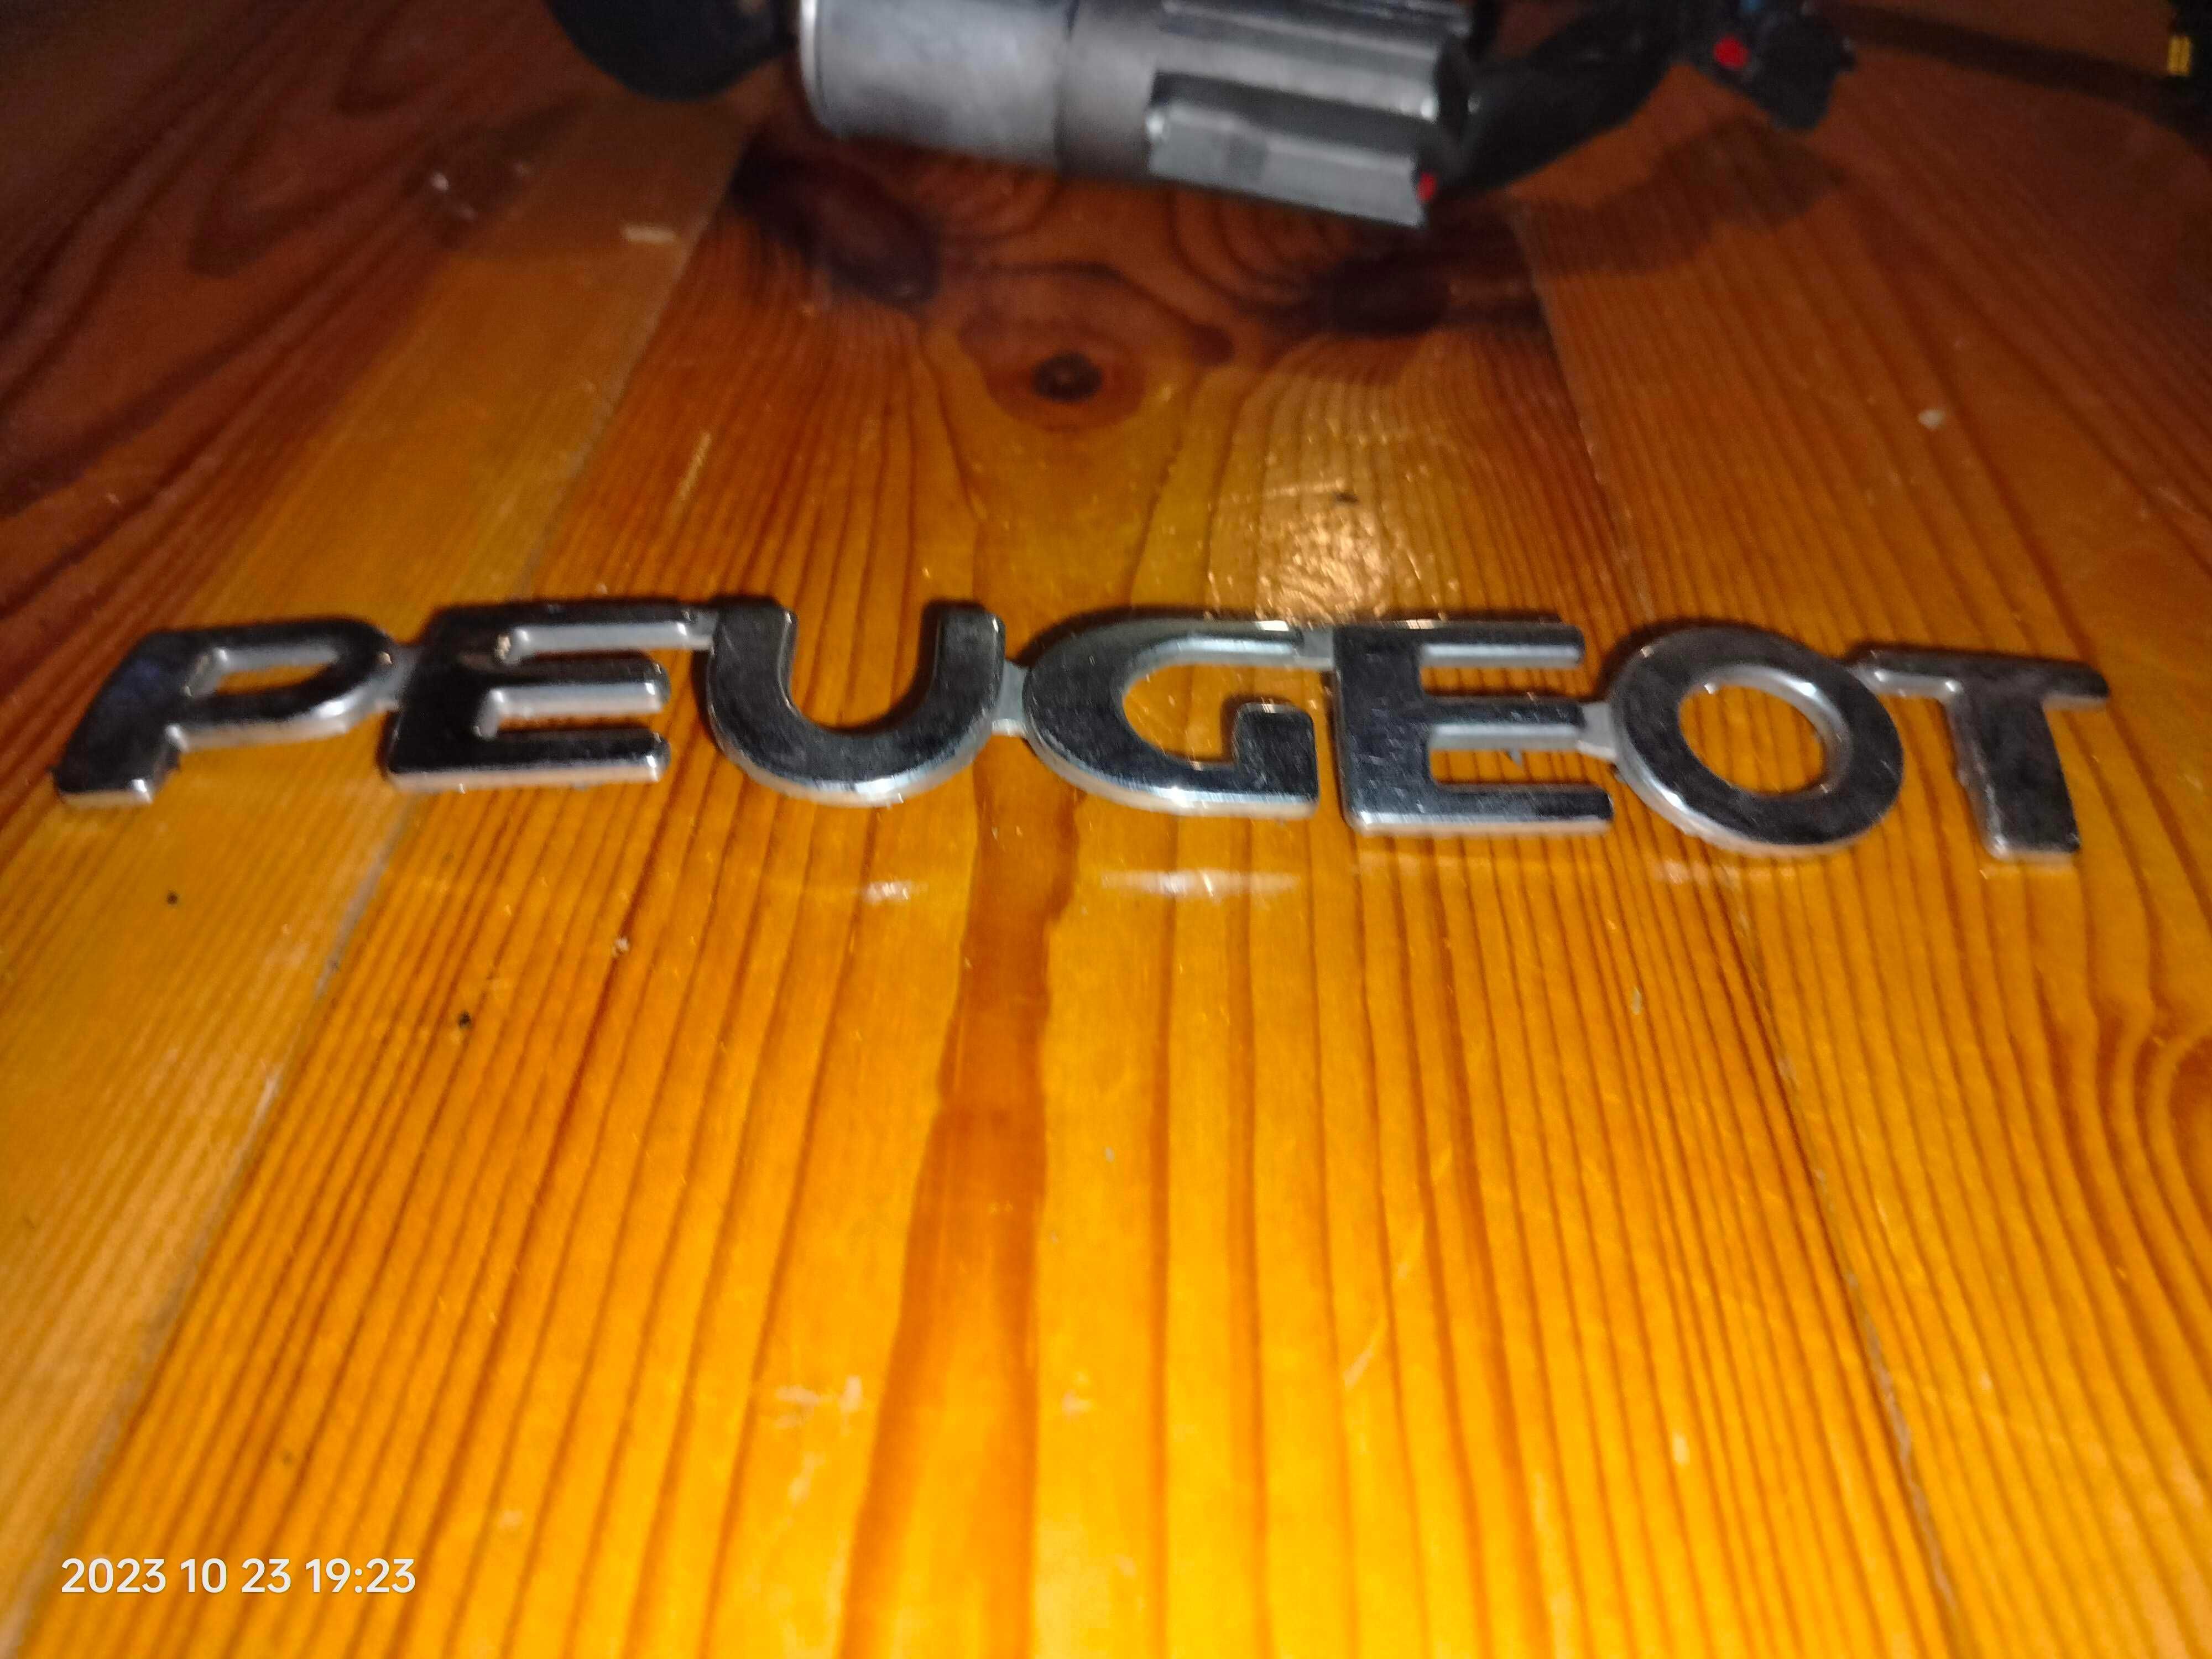 Peugeot 206 emblemat znaczek napis klapy